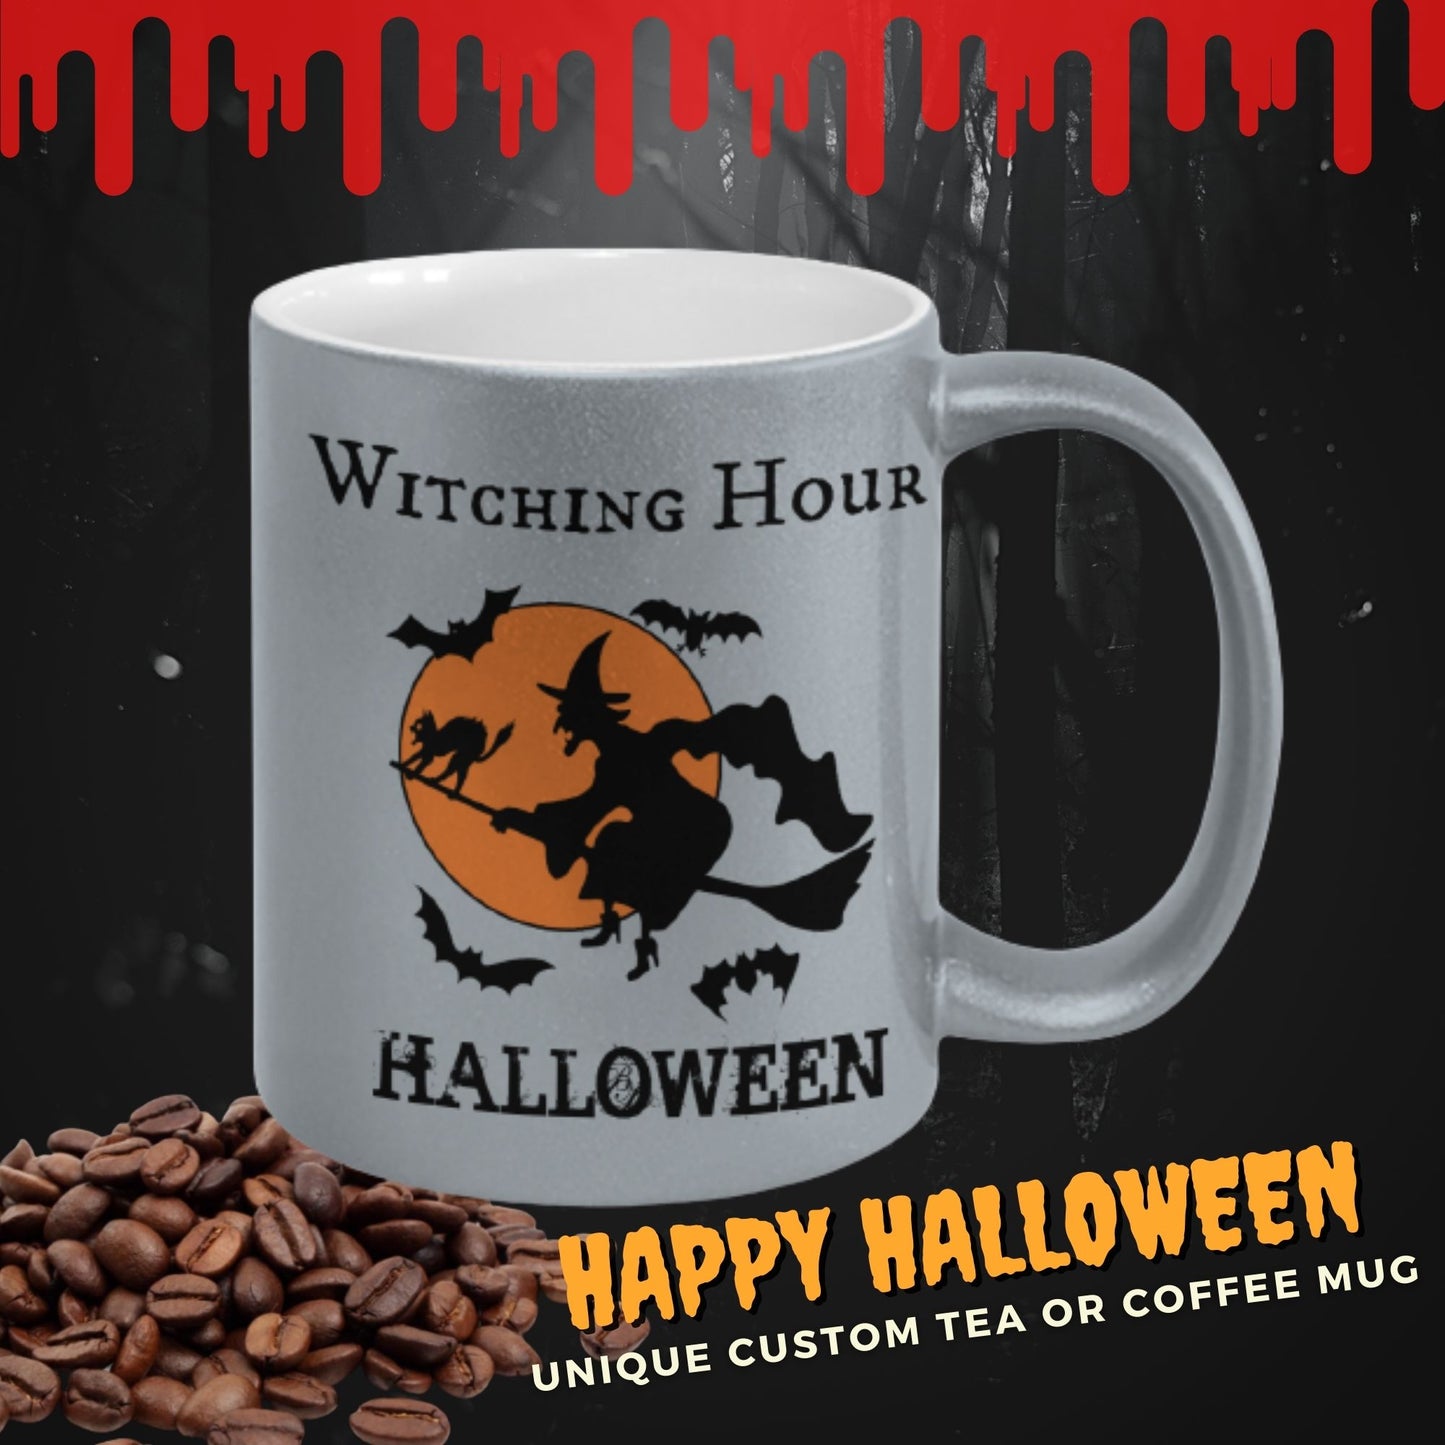 Halloween Mug/Witching Hour Silver Metallic Halloween Novelty Coffee Mug Gift